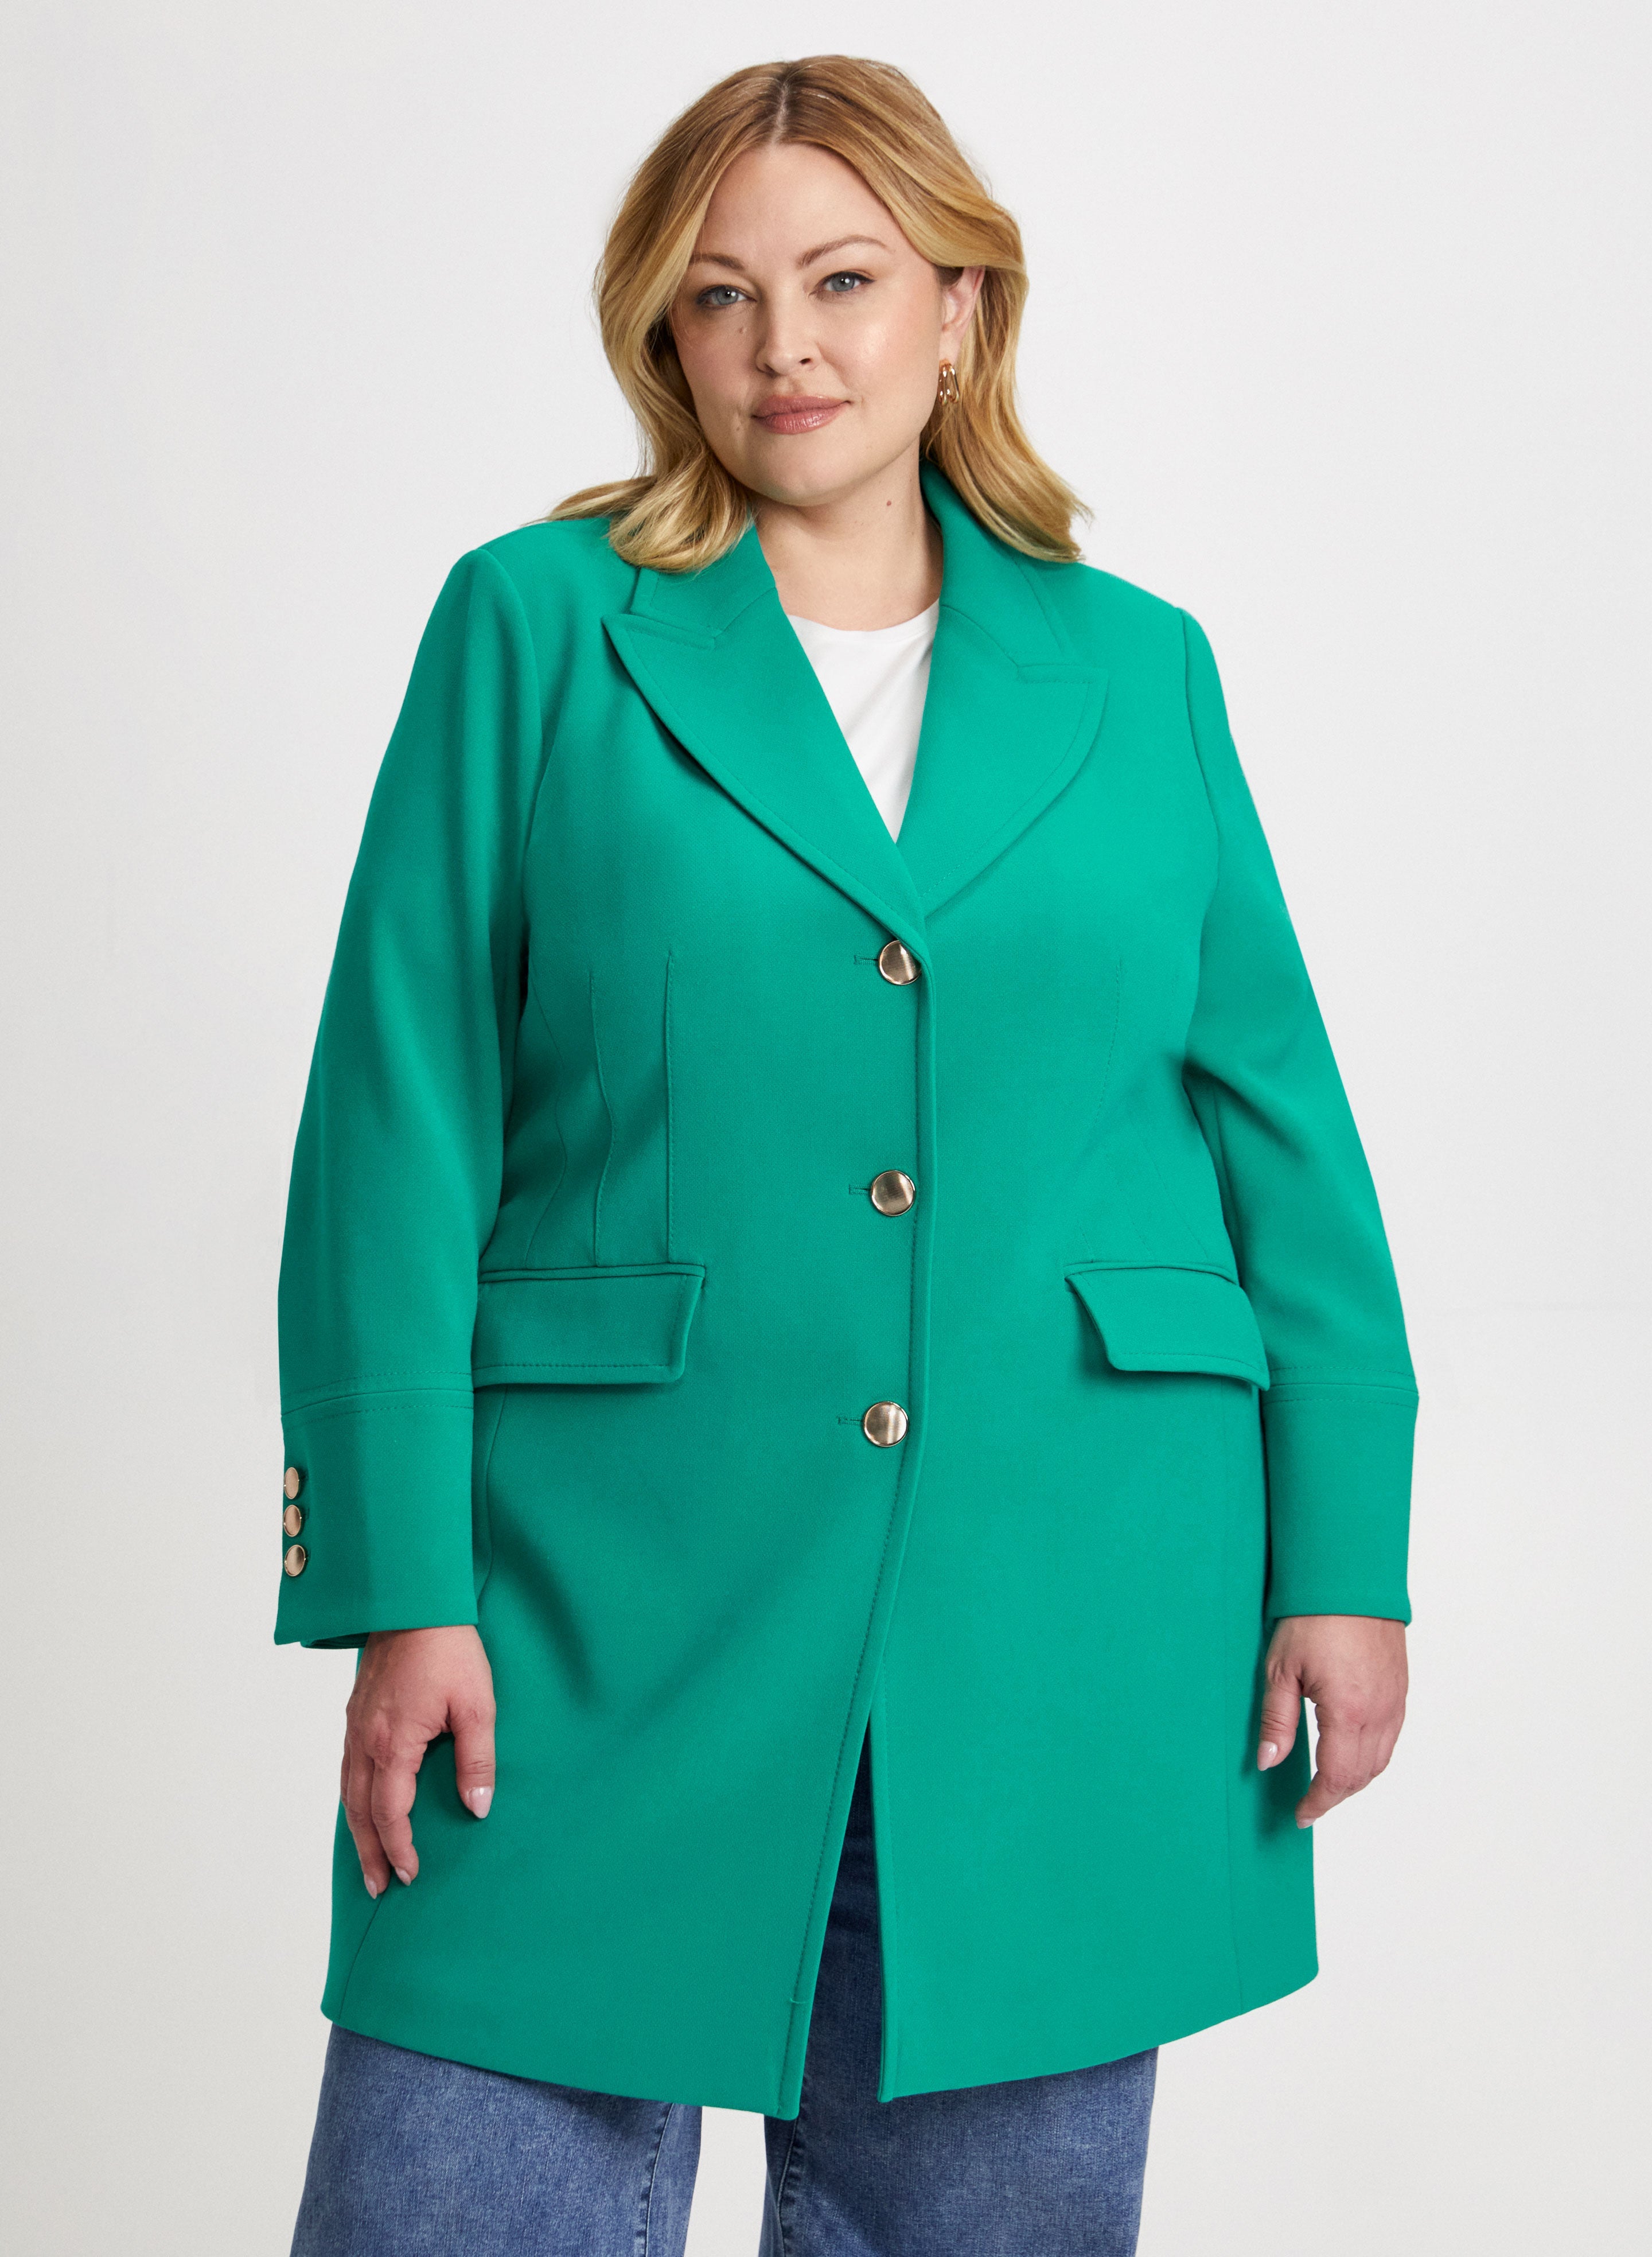 ALFANI Women's Button Lime Green Back-Pleat Trench Coat Size Medium $149